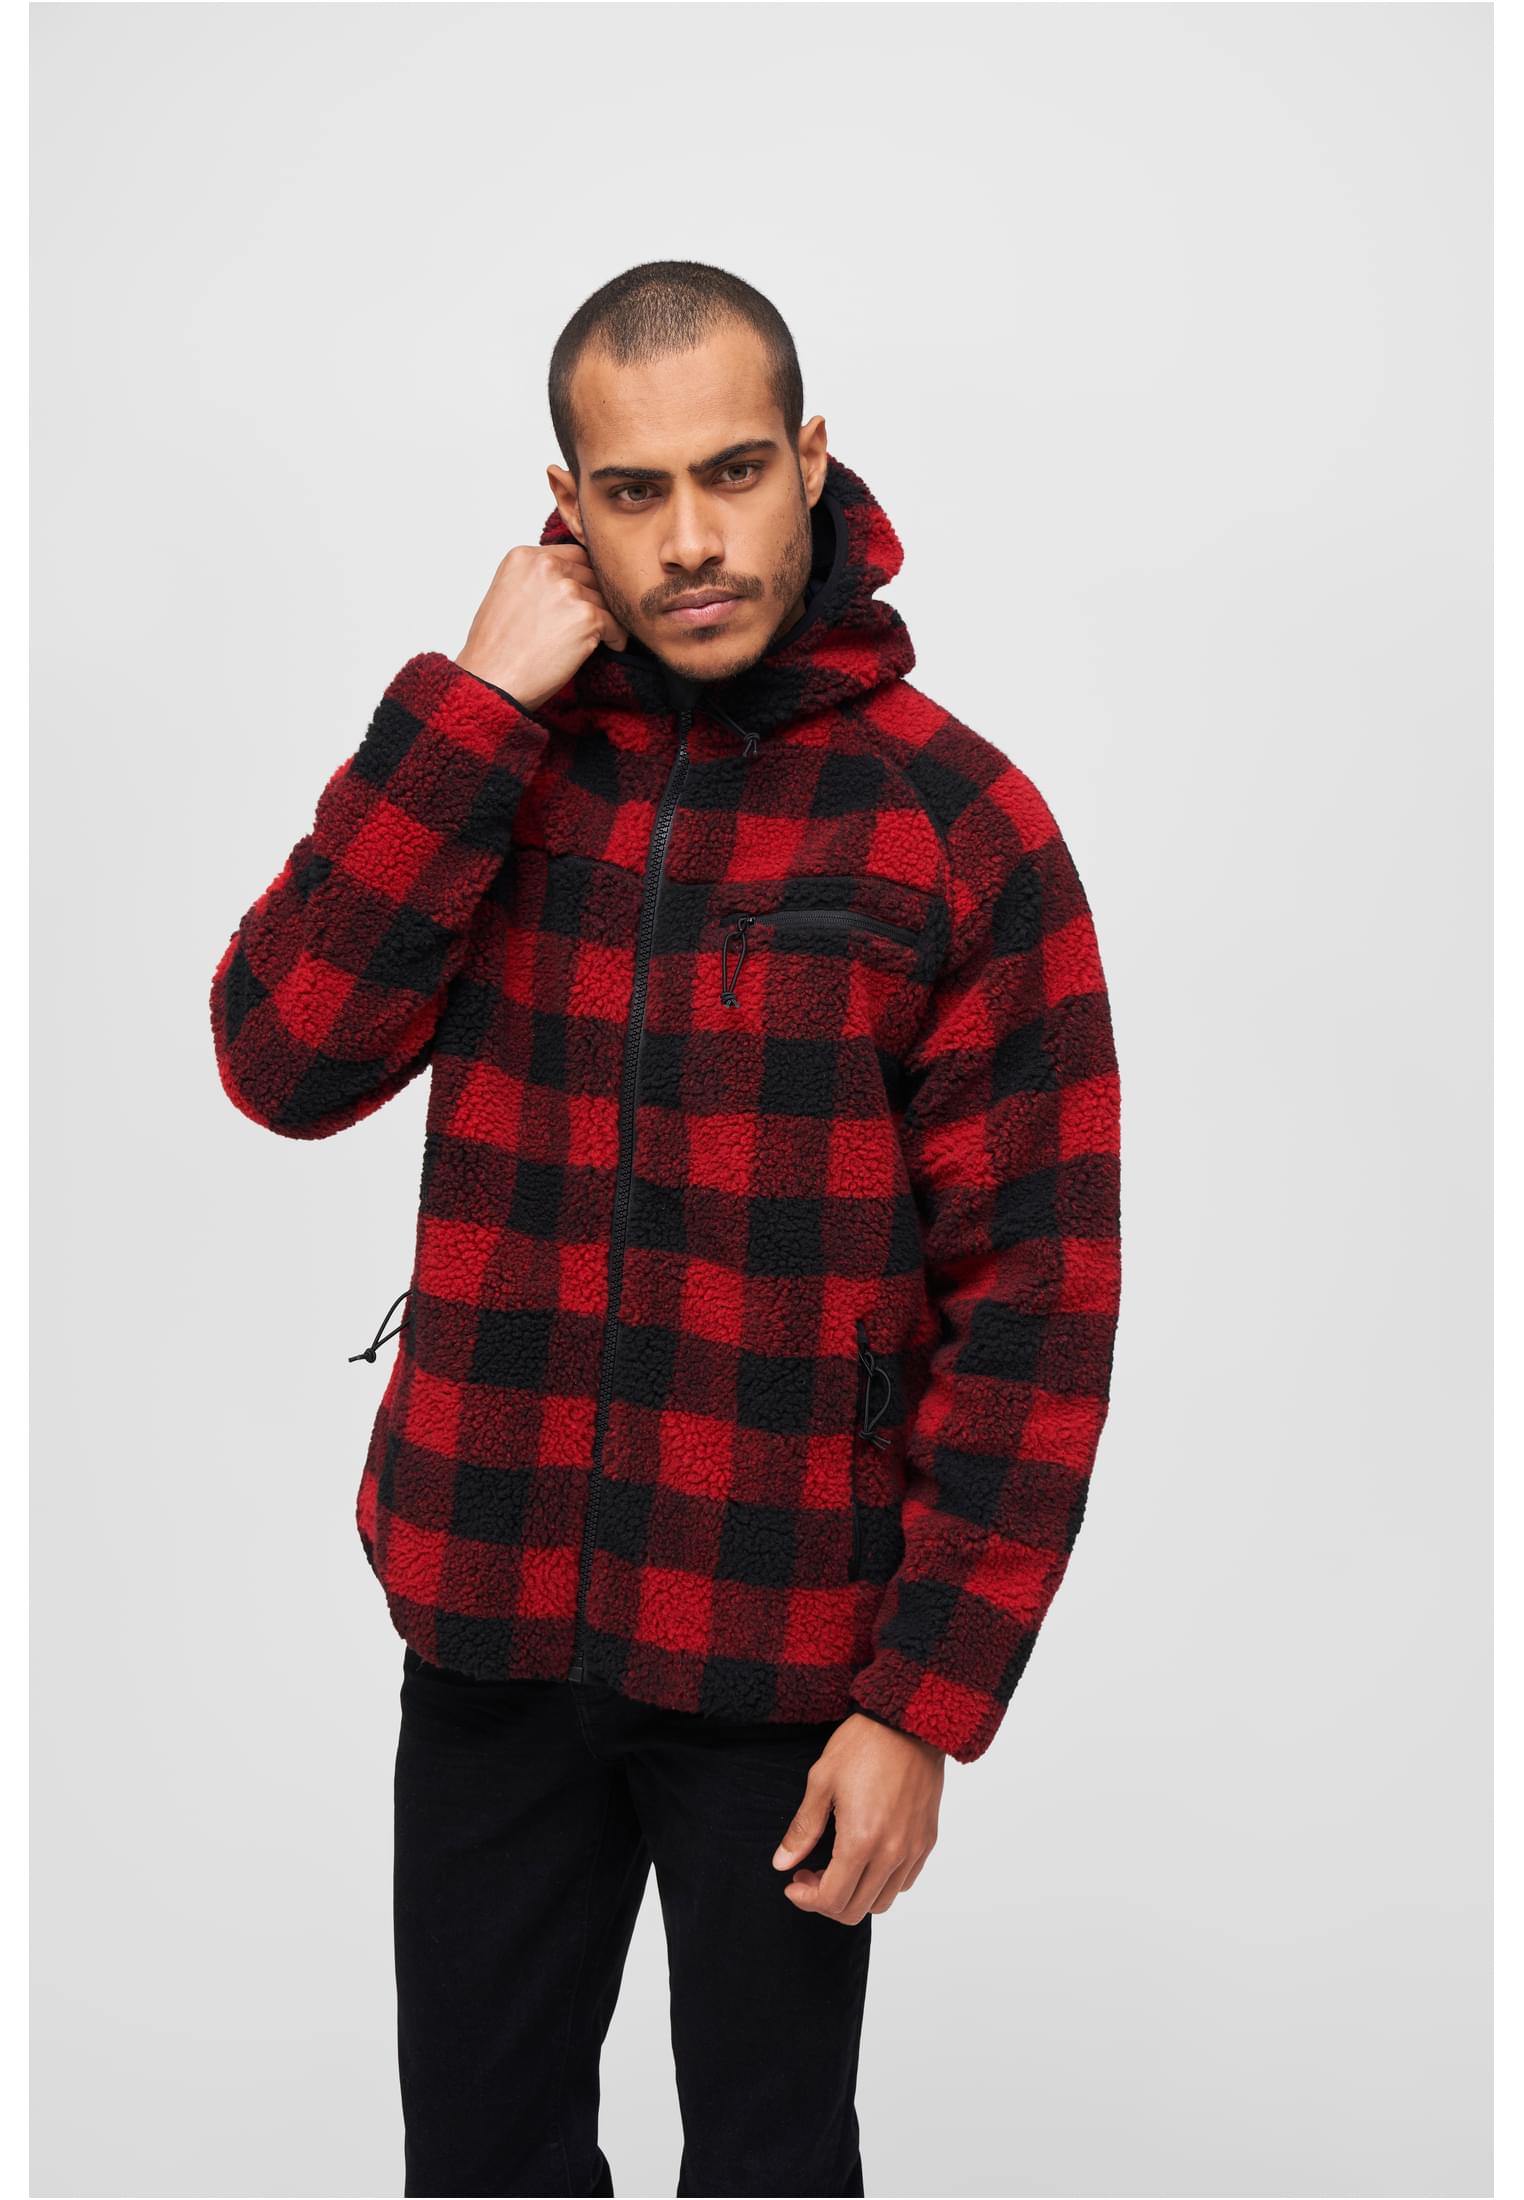 Pullover Teddyfleece Worker Jacket in Farbe red/black